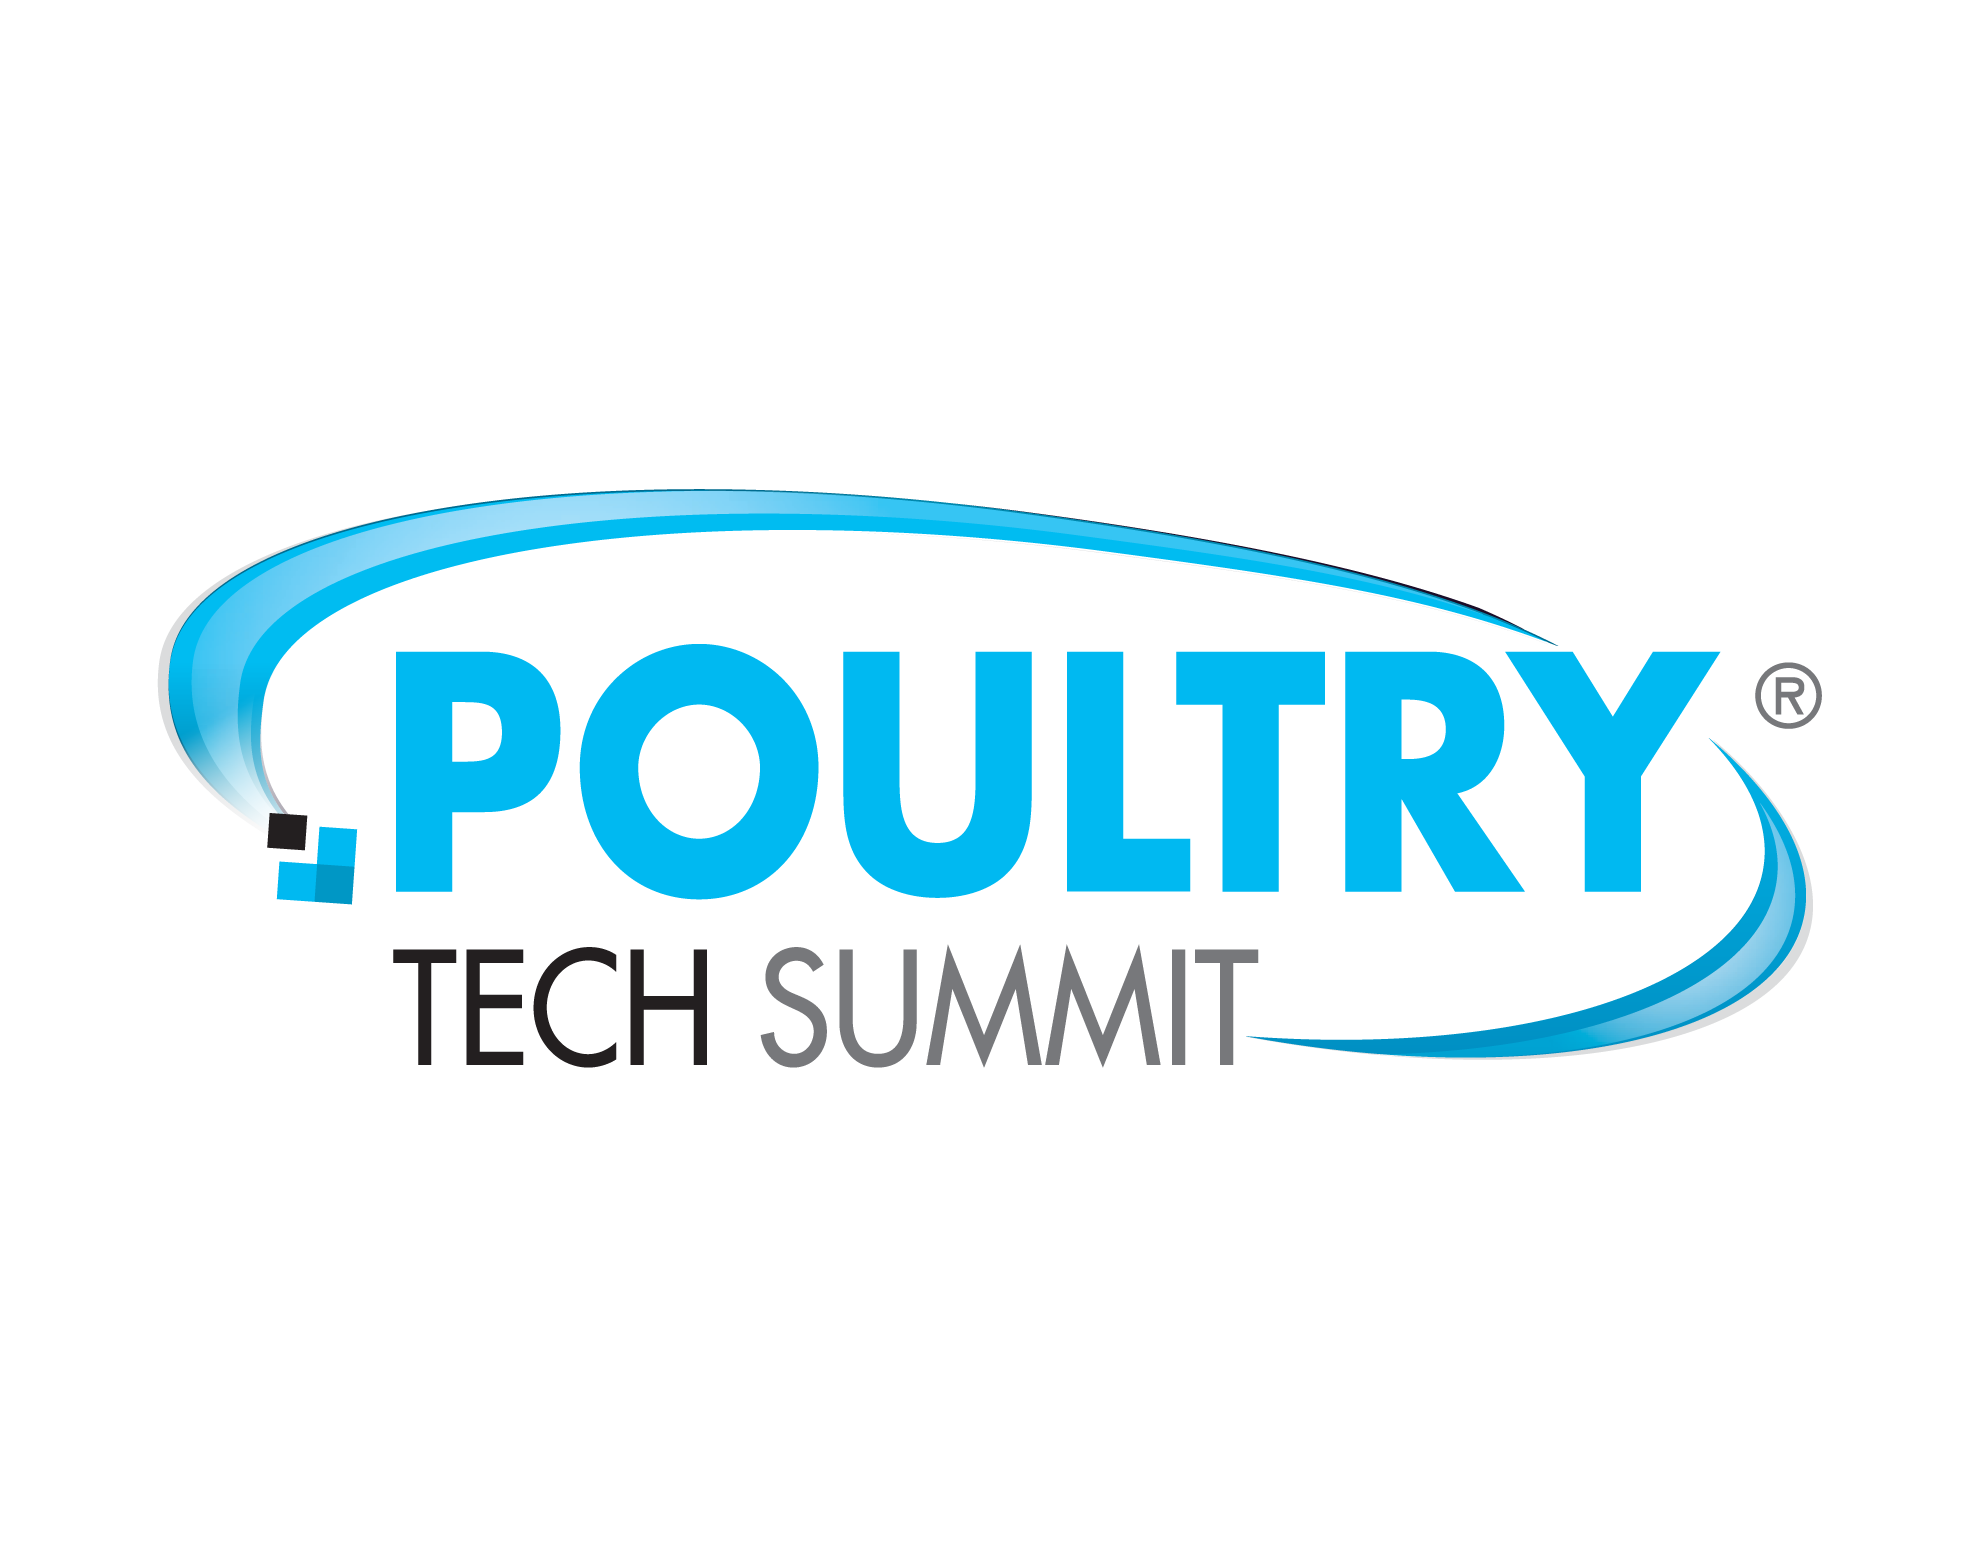 Poultry Tech Summit